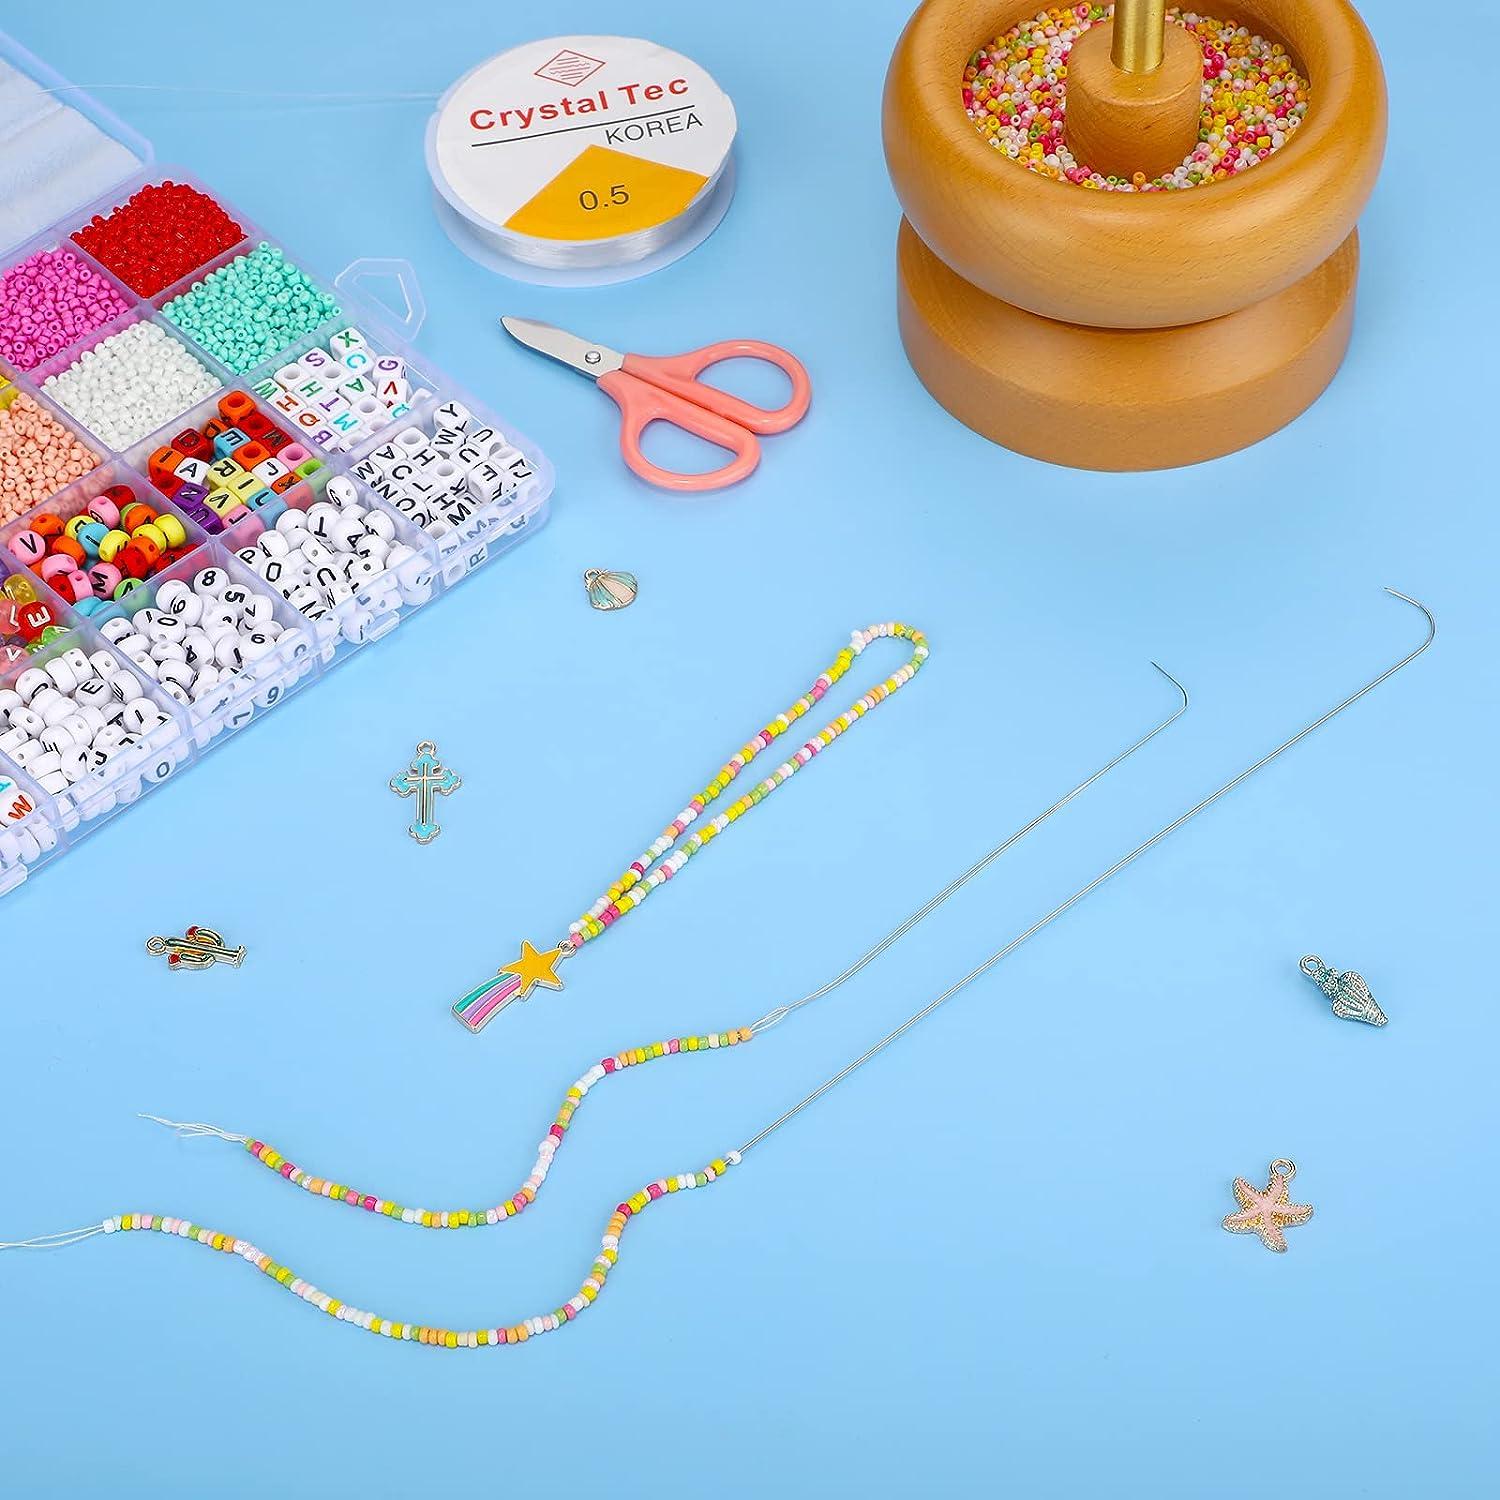 Big Eye Curved Bead Spinner Needle - Capital City Beads